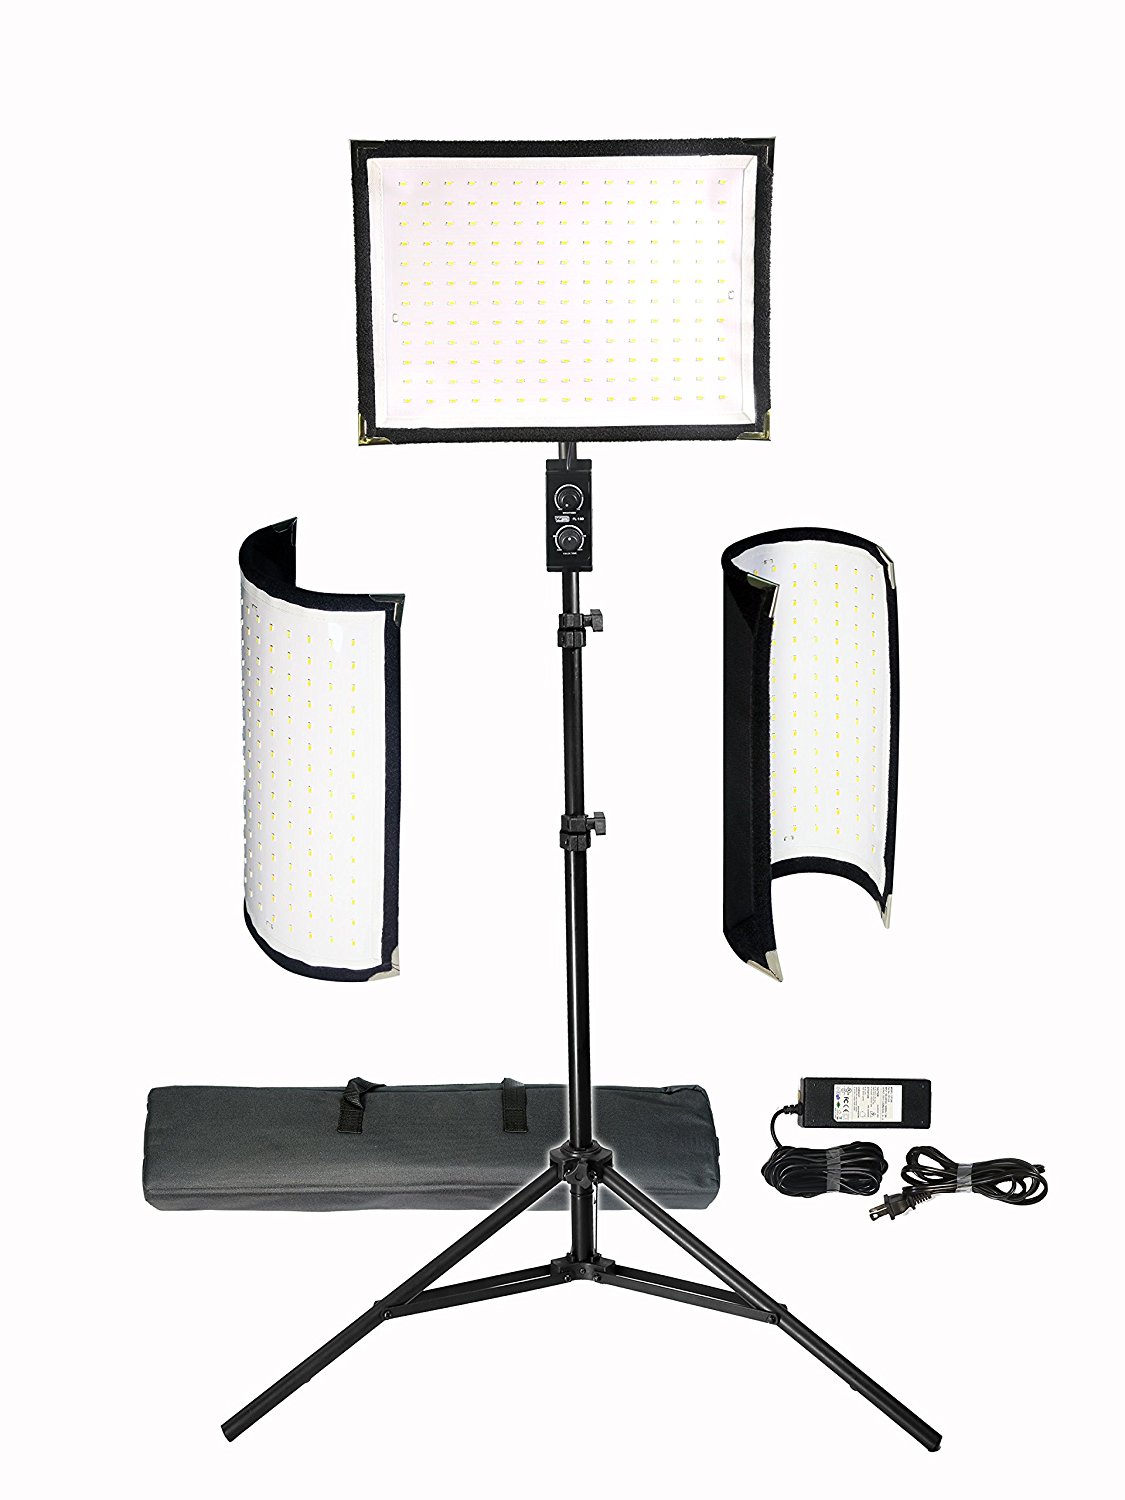 FL-180 Flexible Vari-Color LED Light Panel Kit with Stand